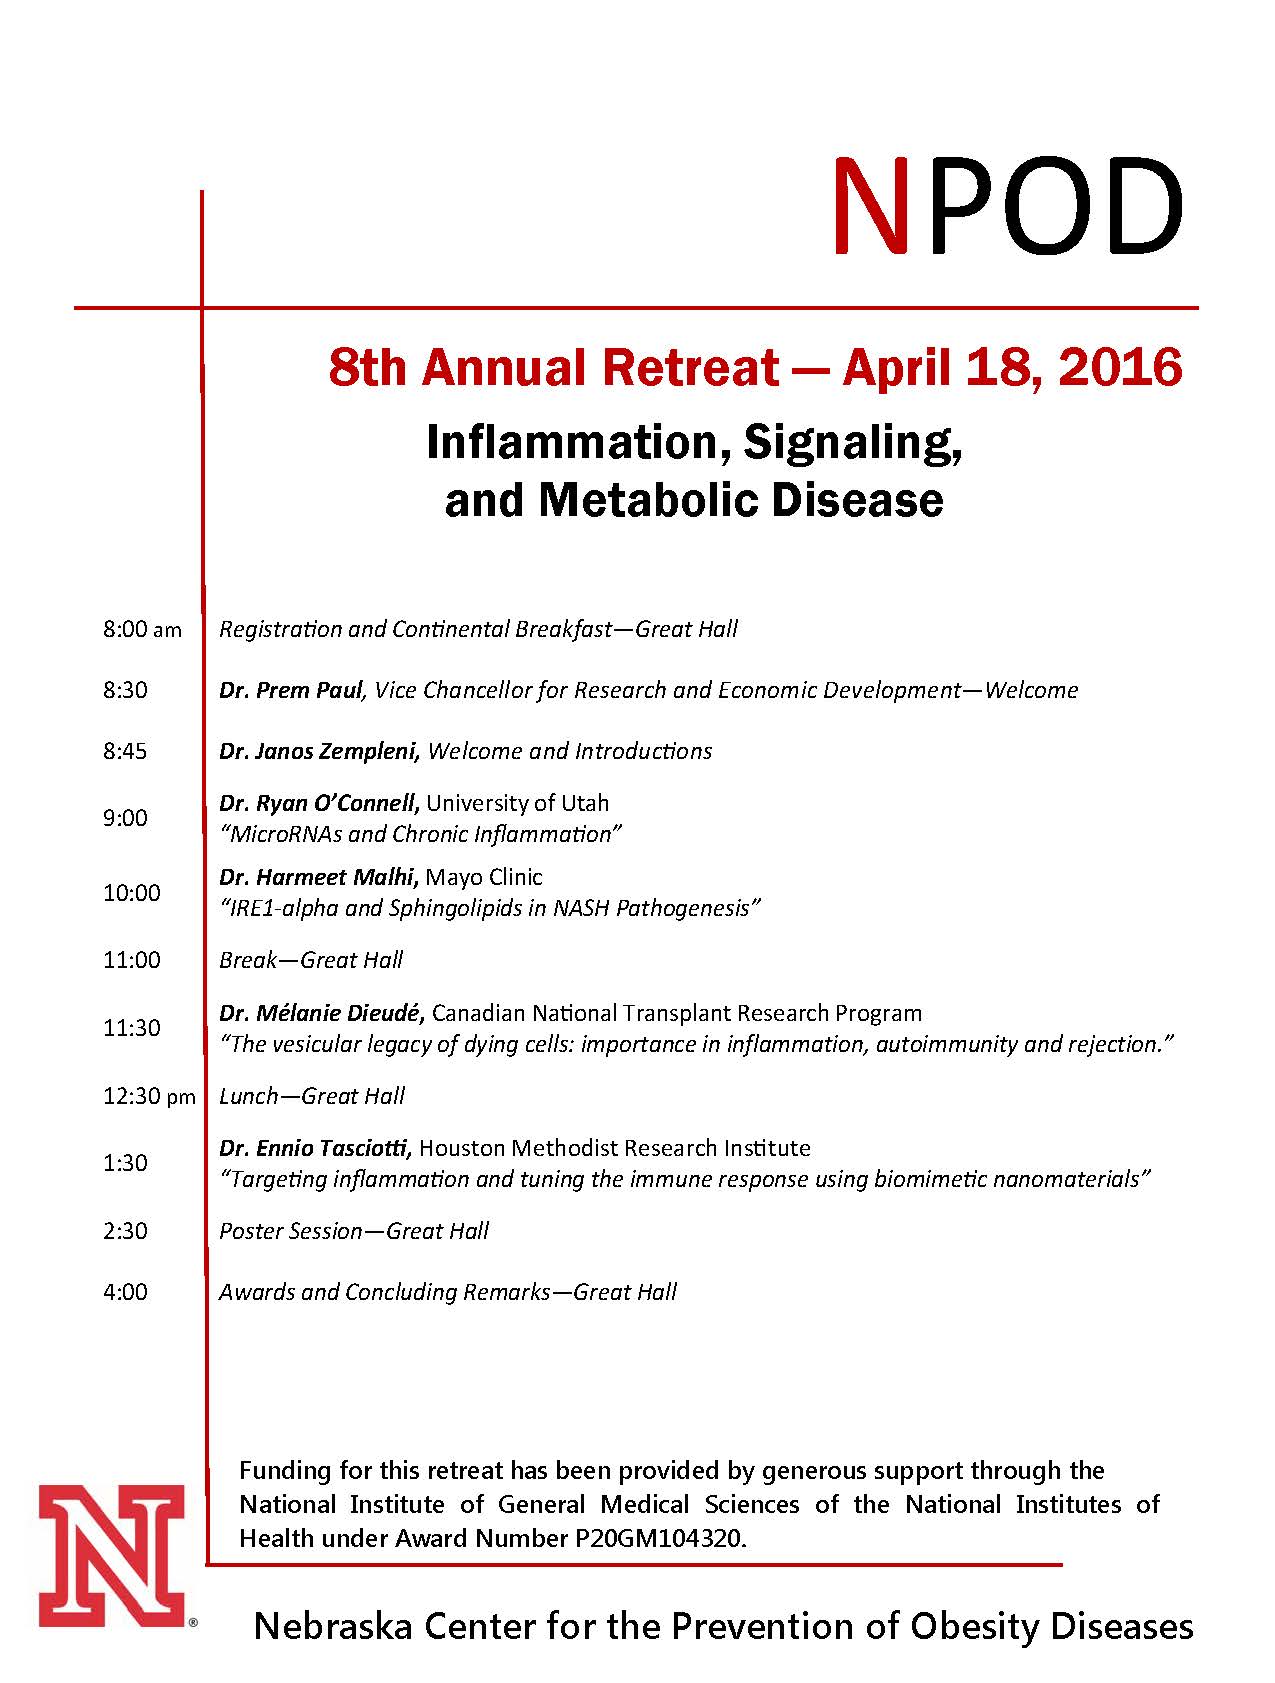 NPOD Retreat Agenda